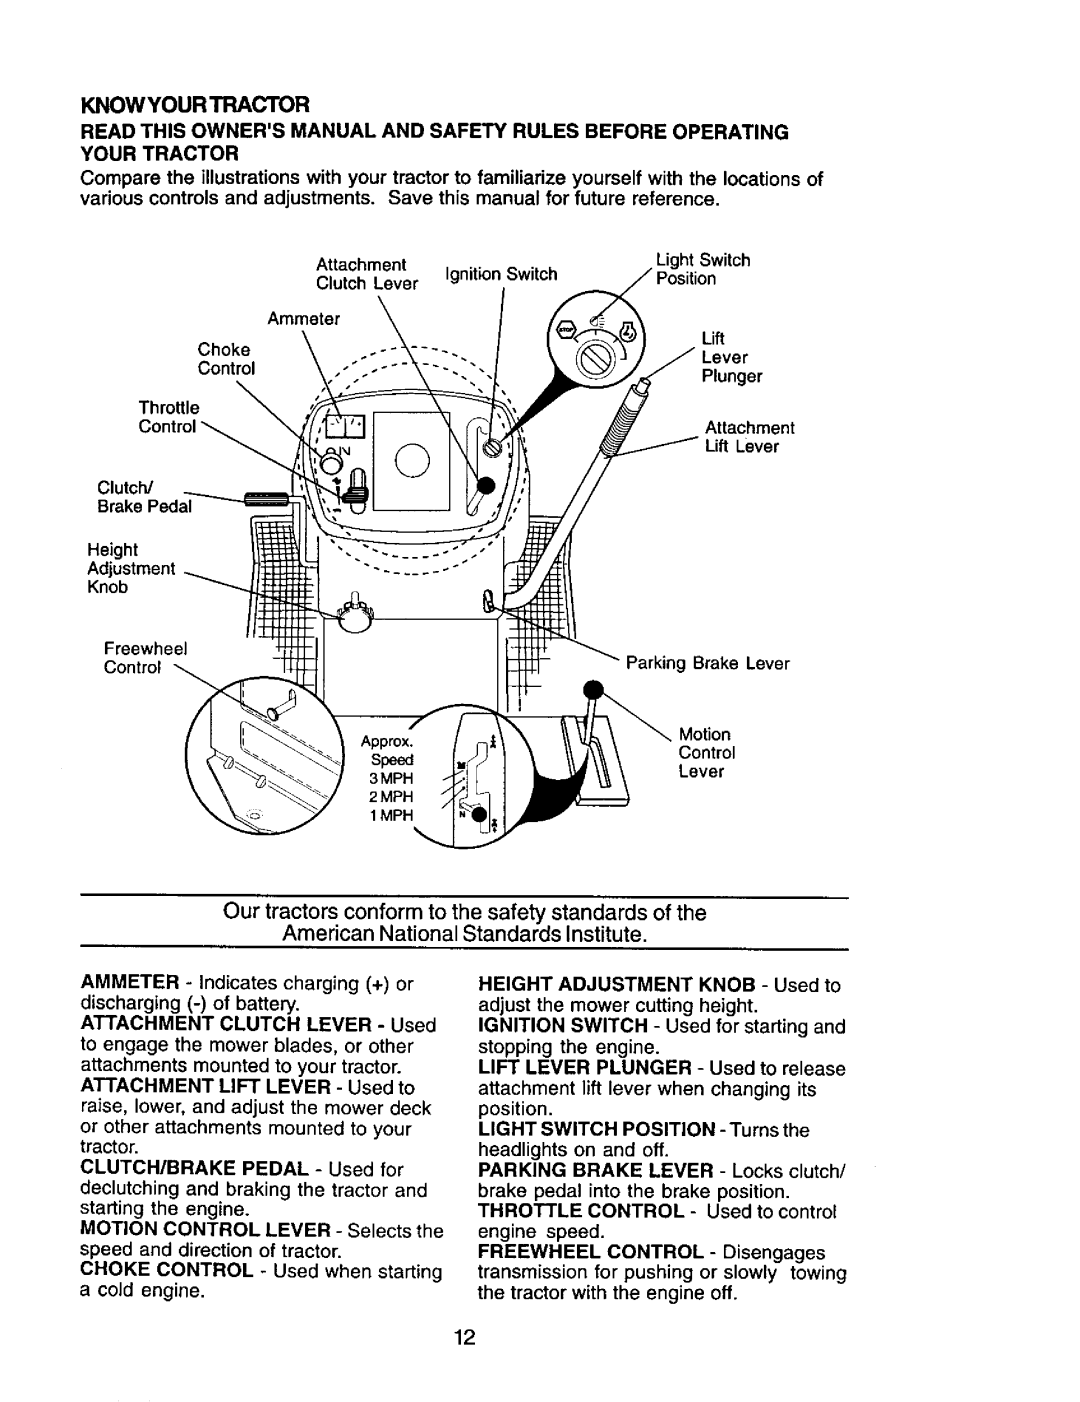 Craftsman 917.272464 owner manual American National Standards Institute, engine speed 